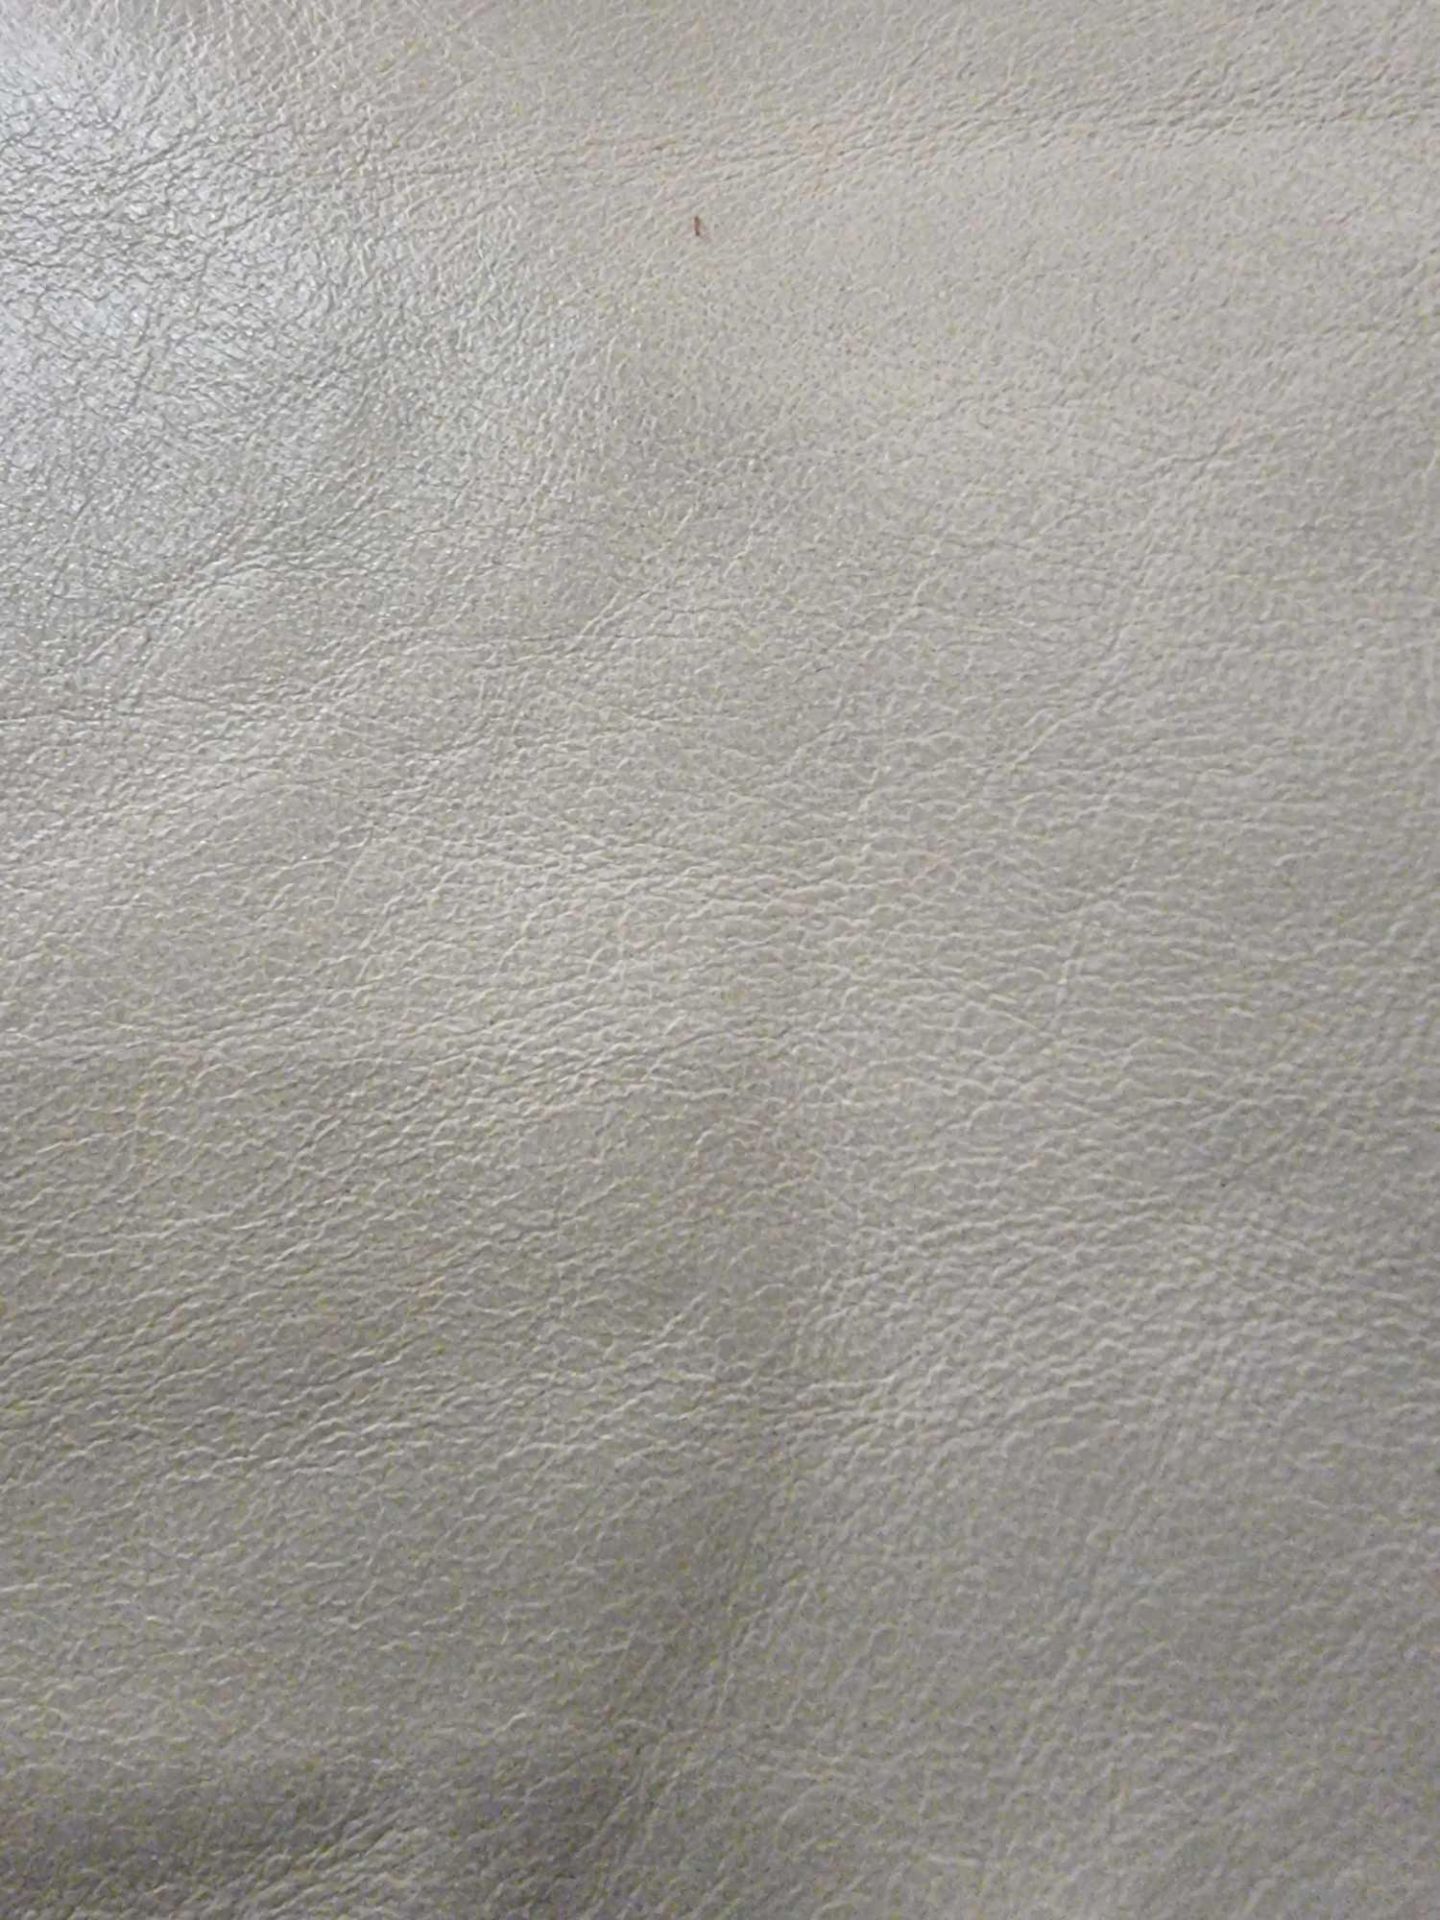 Yarwood Aviator Chalk Leather Hide approximately 4 2M2 2 1 x 2cm ( Hide No,201)